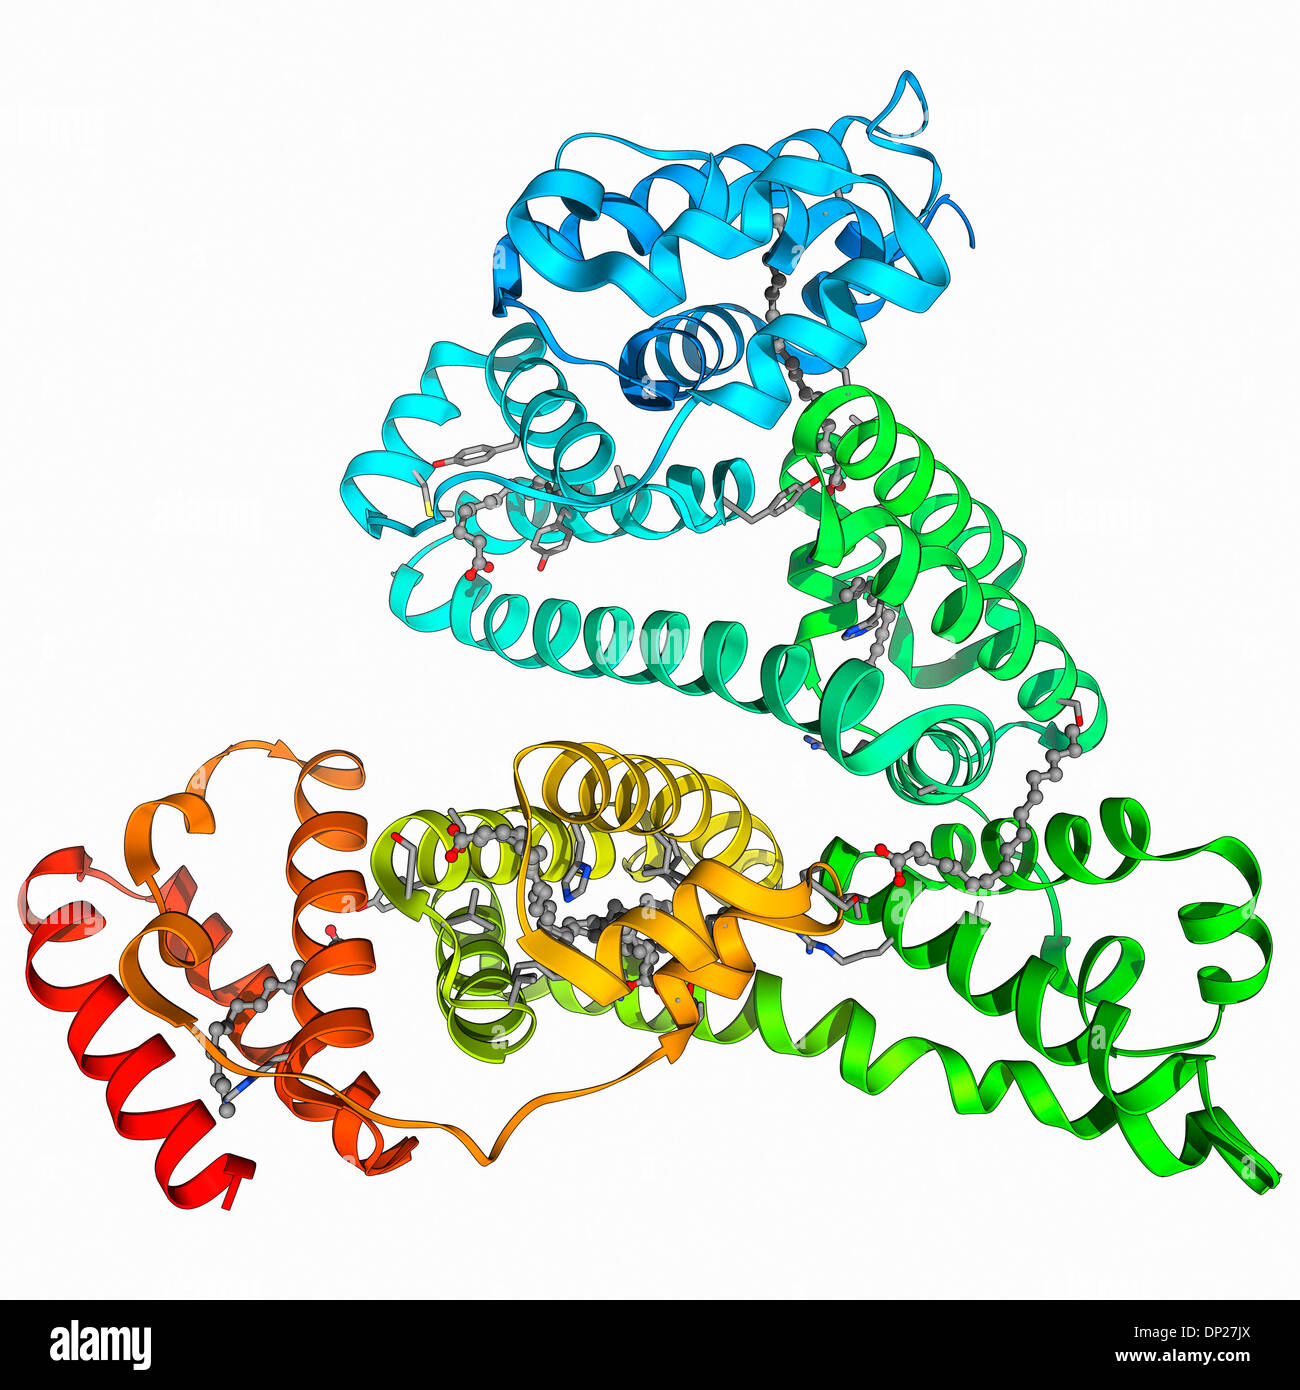 Human serum albumin molecule Stock Photo